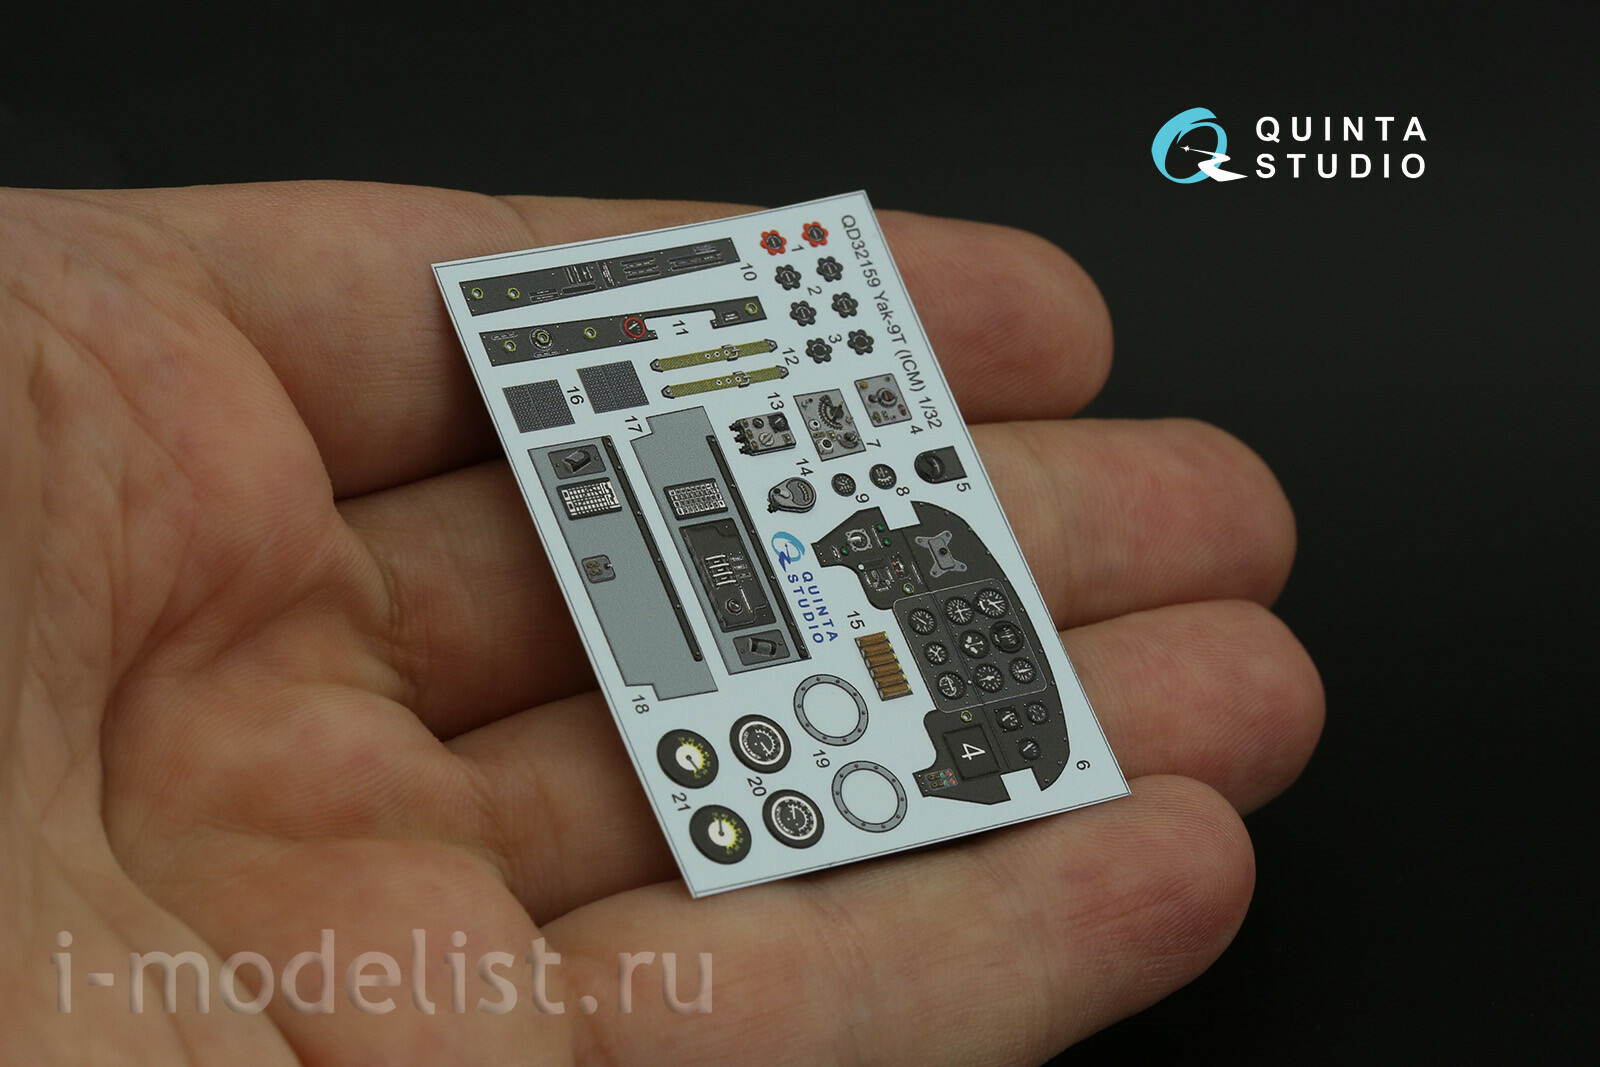 QD32159 Quinta Studio 1/32 3D Decal cabin interior Yakovlev-9T/K (ICM)